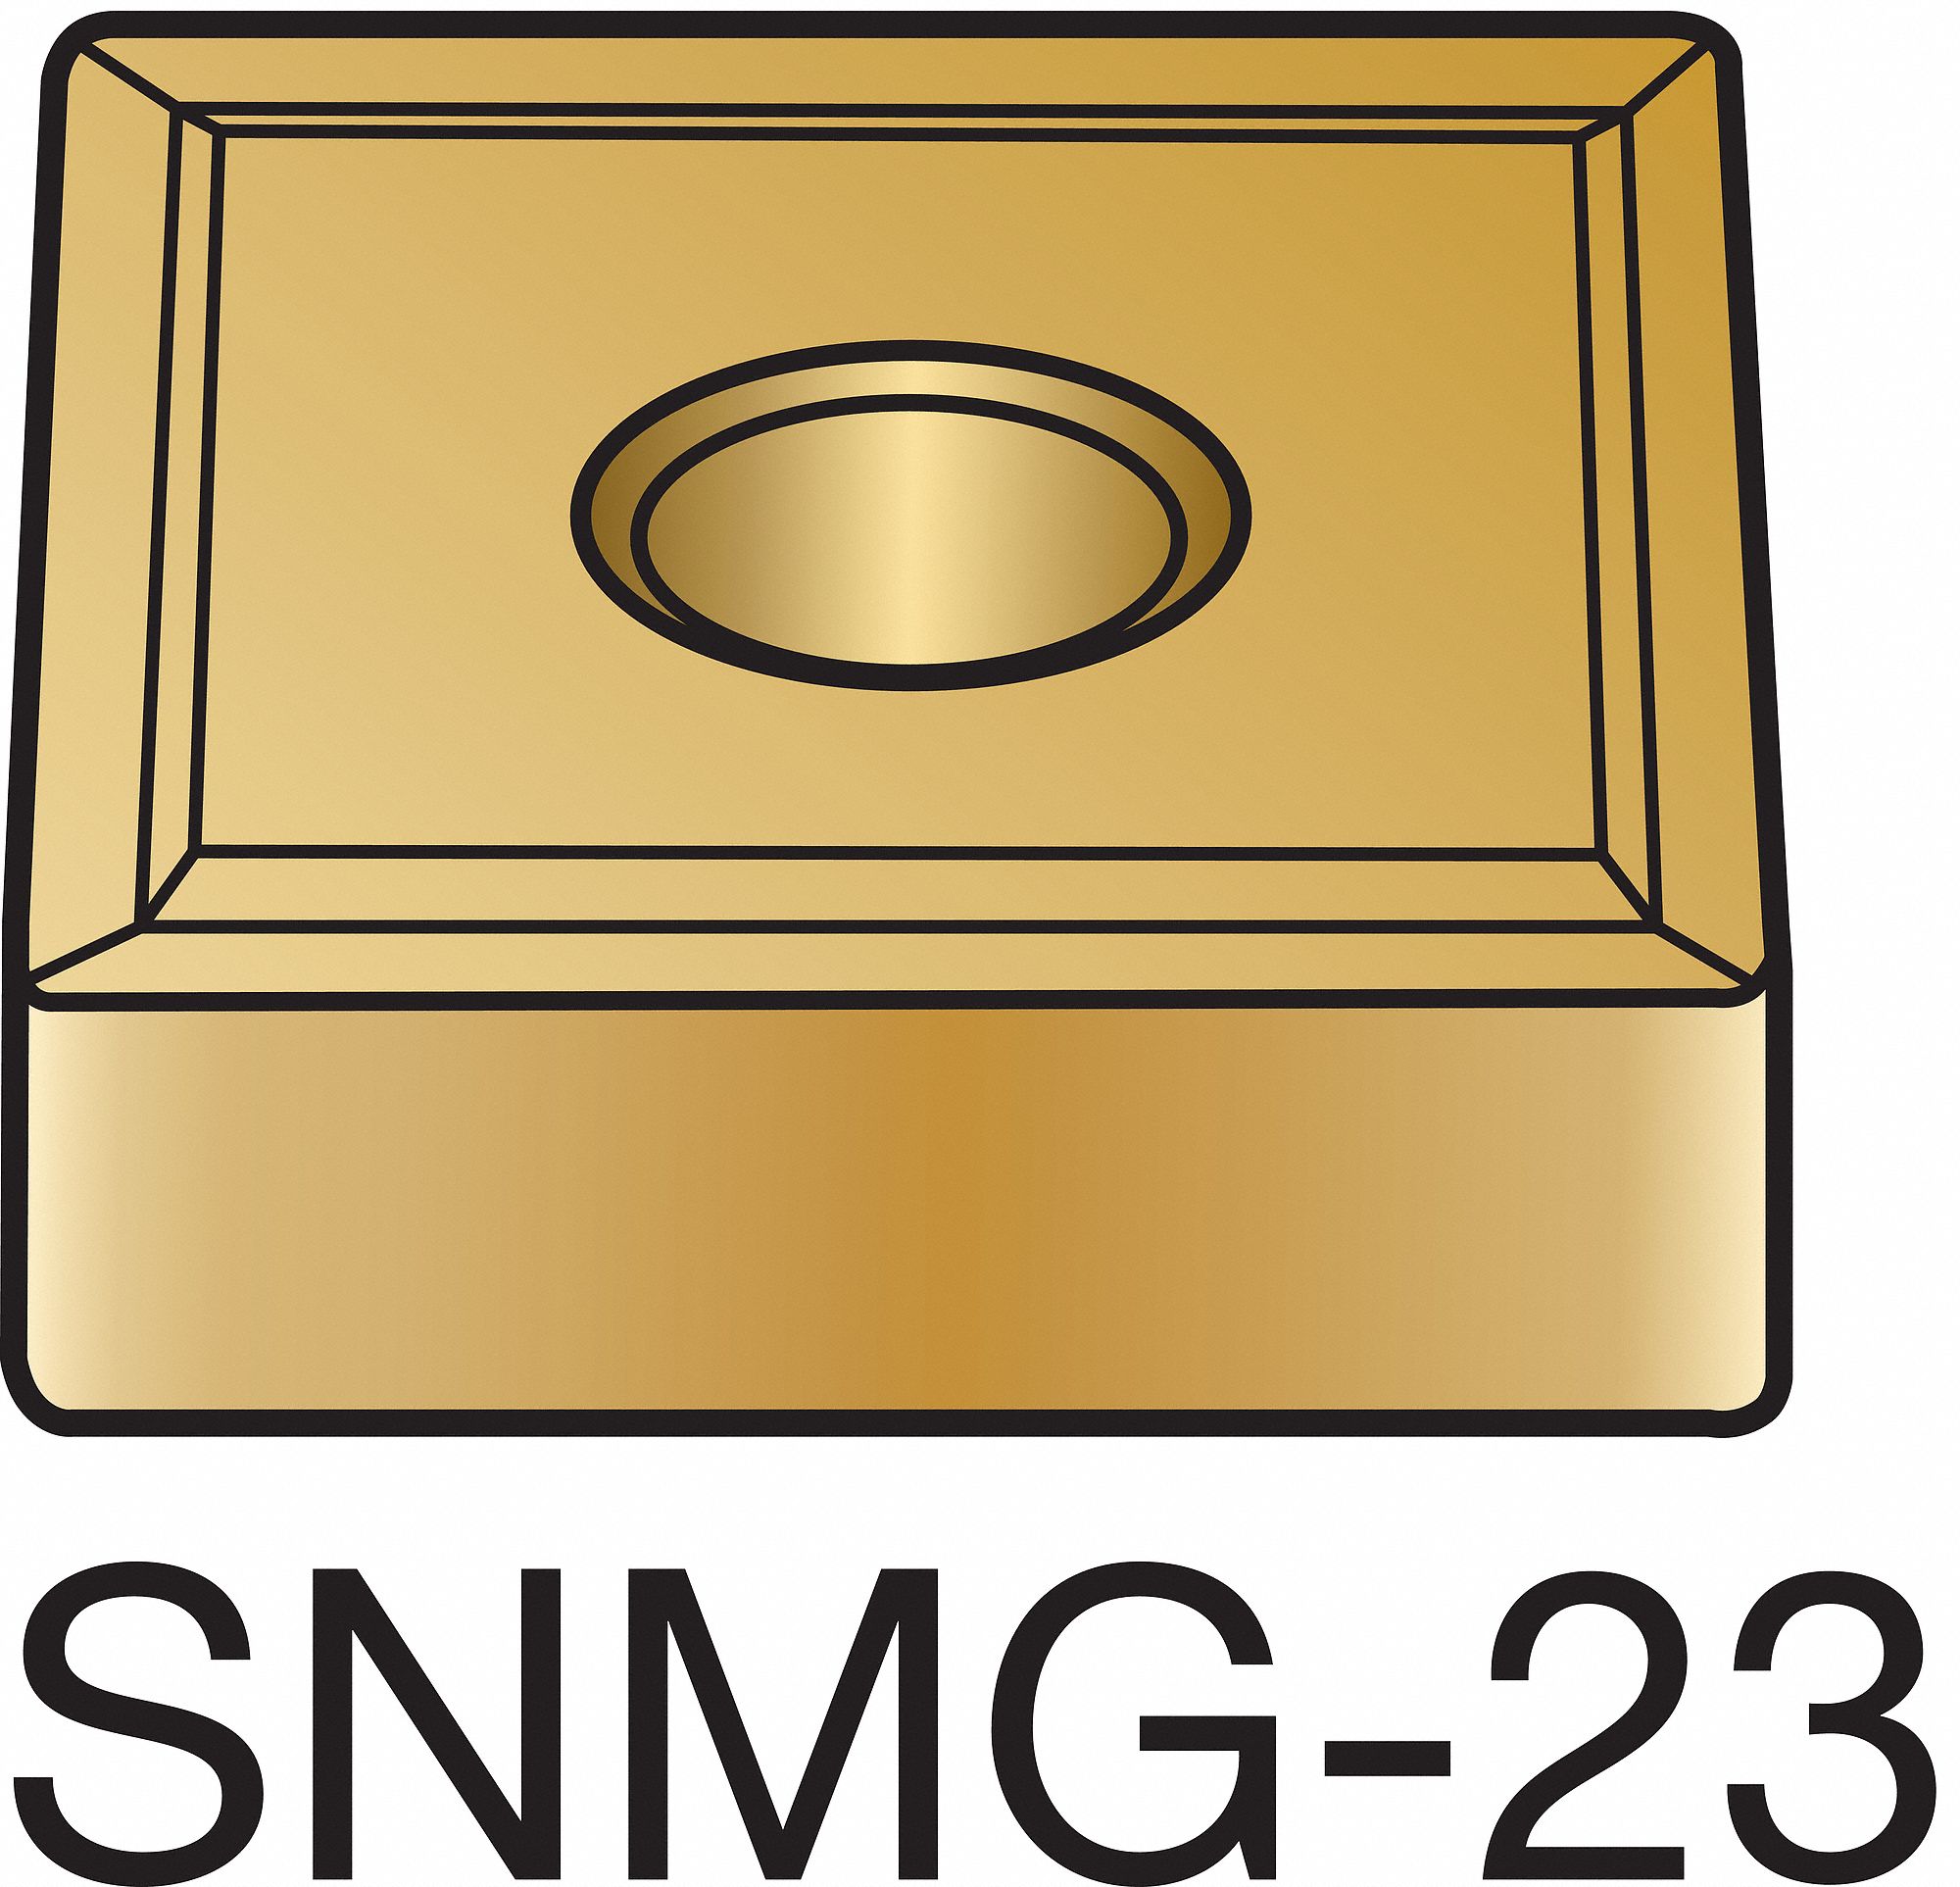 10 NIB Sandvik Coromant CNMG 643-23 H13A Carbide Inserts CNMG 19 06 12-23 H13A